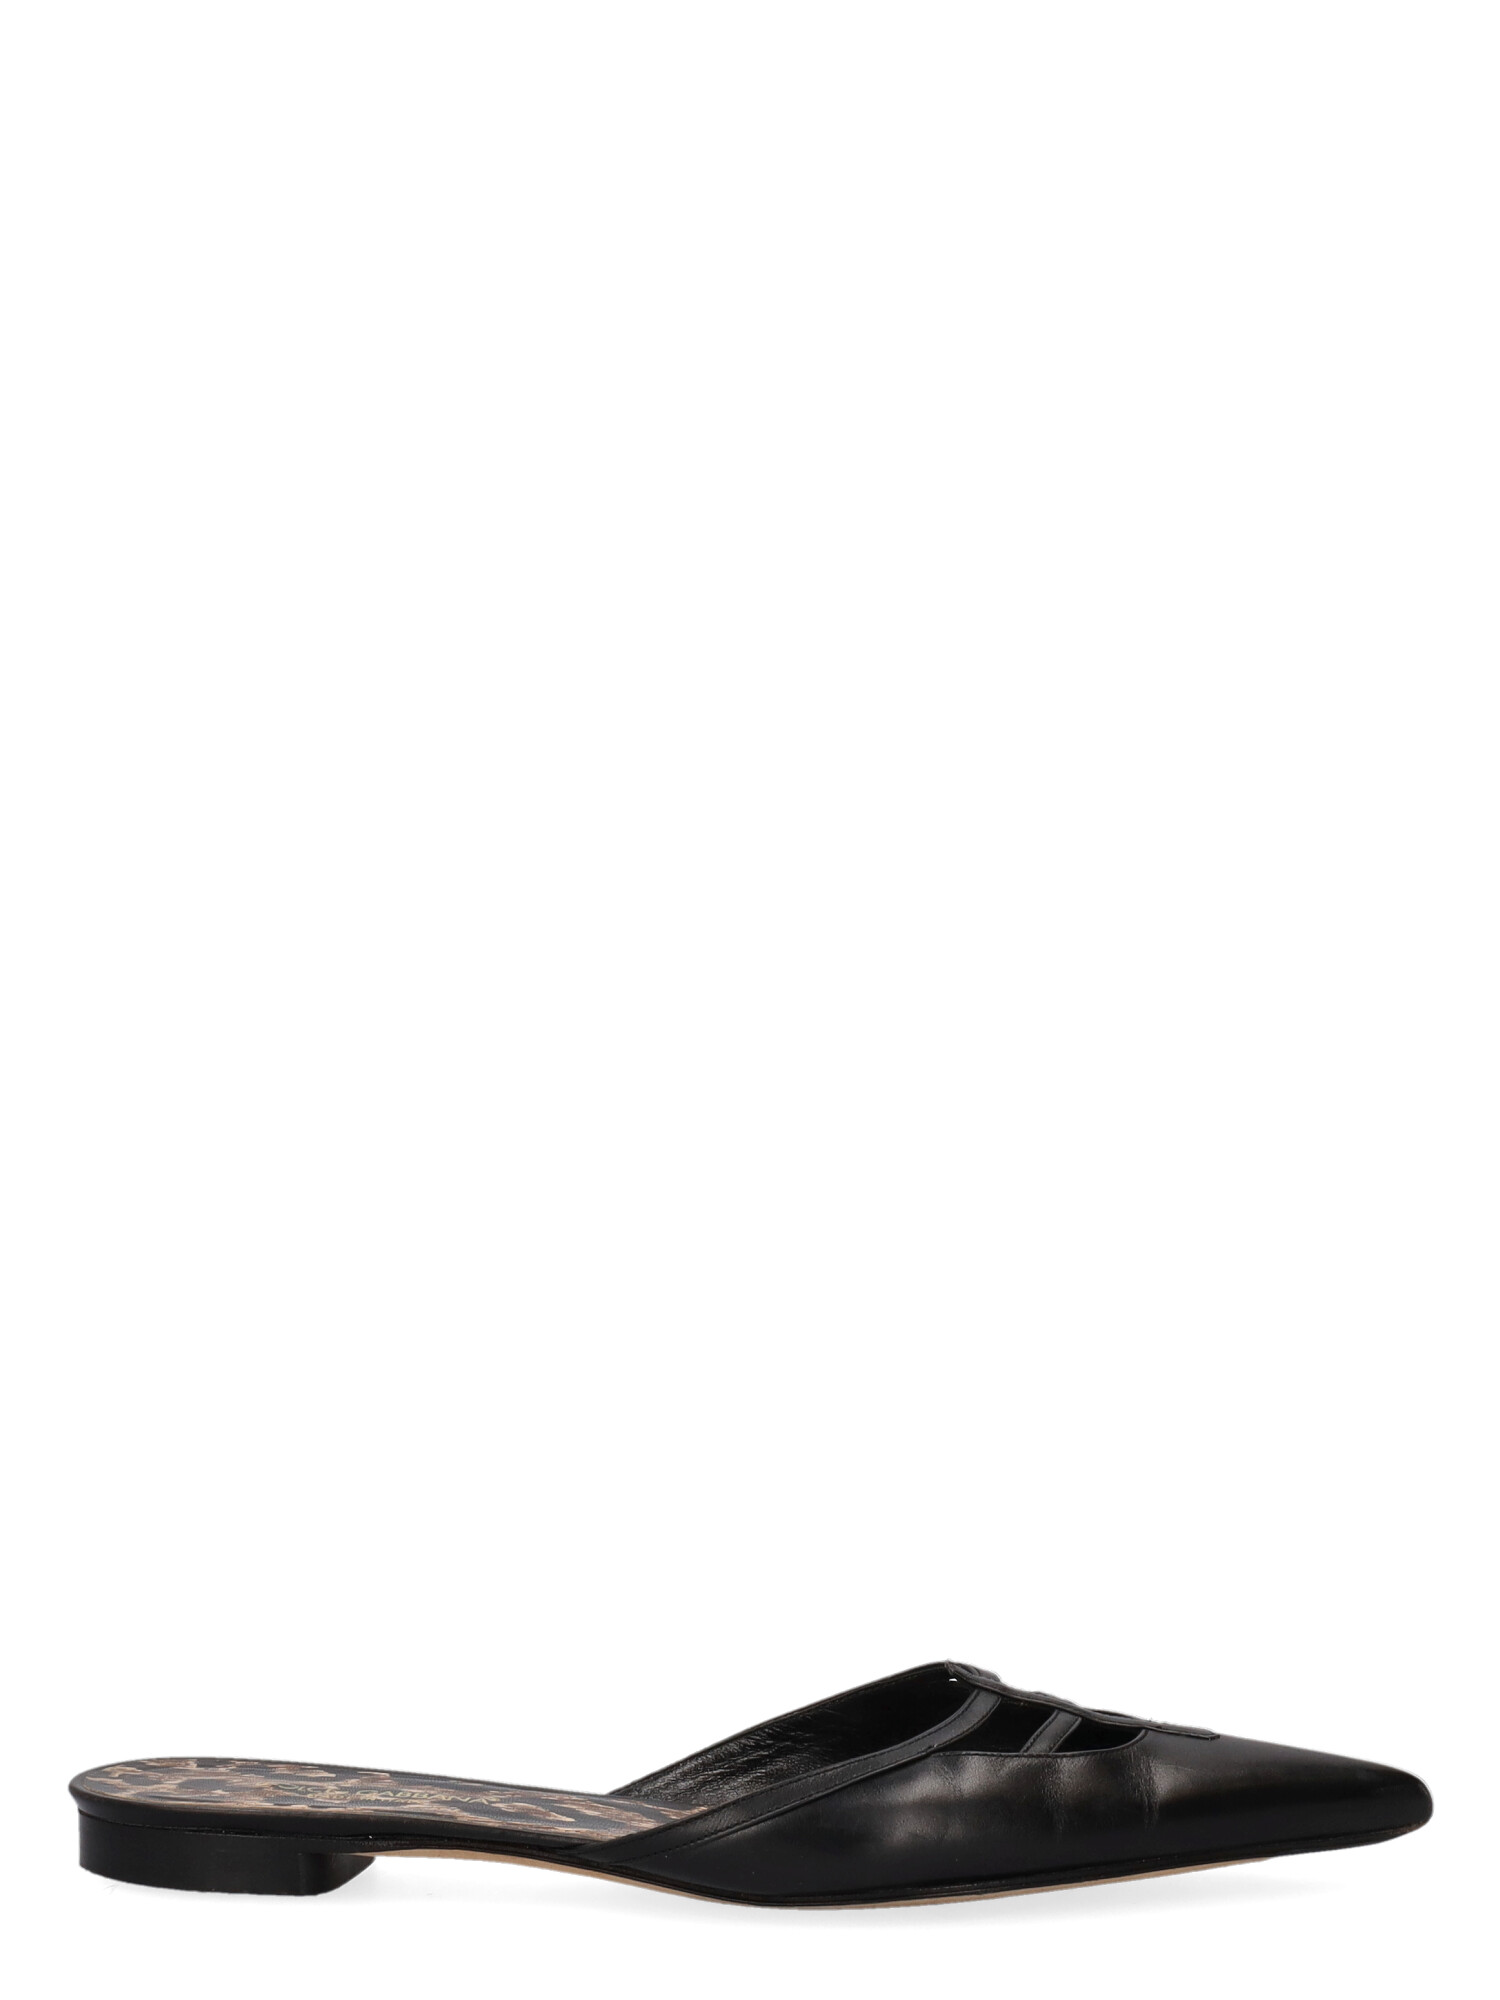 Dolce & Gabbana Femme Slippers Black Leather